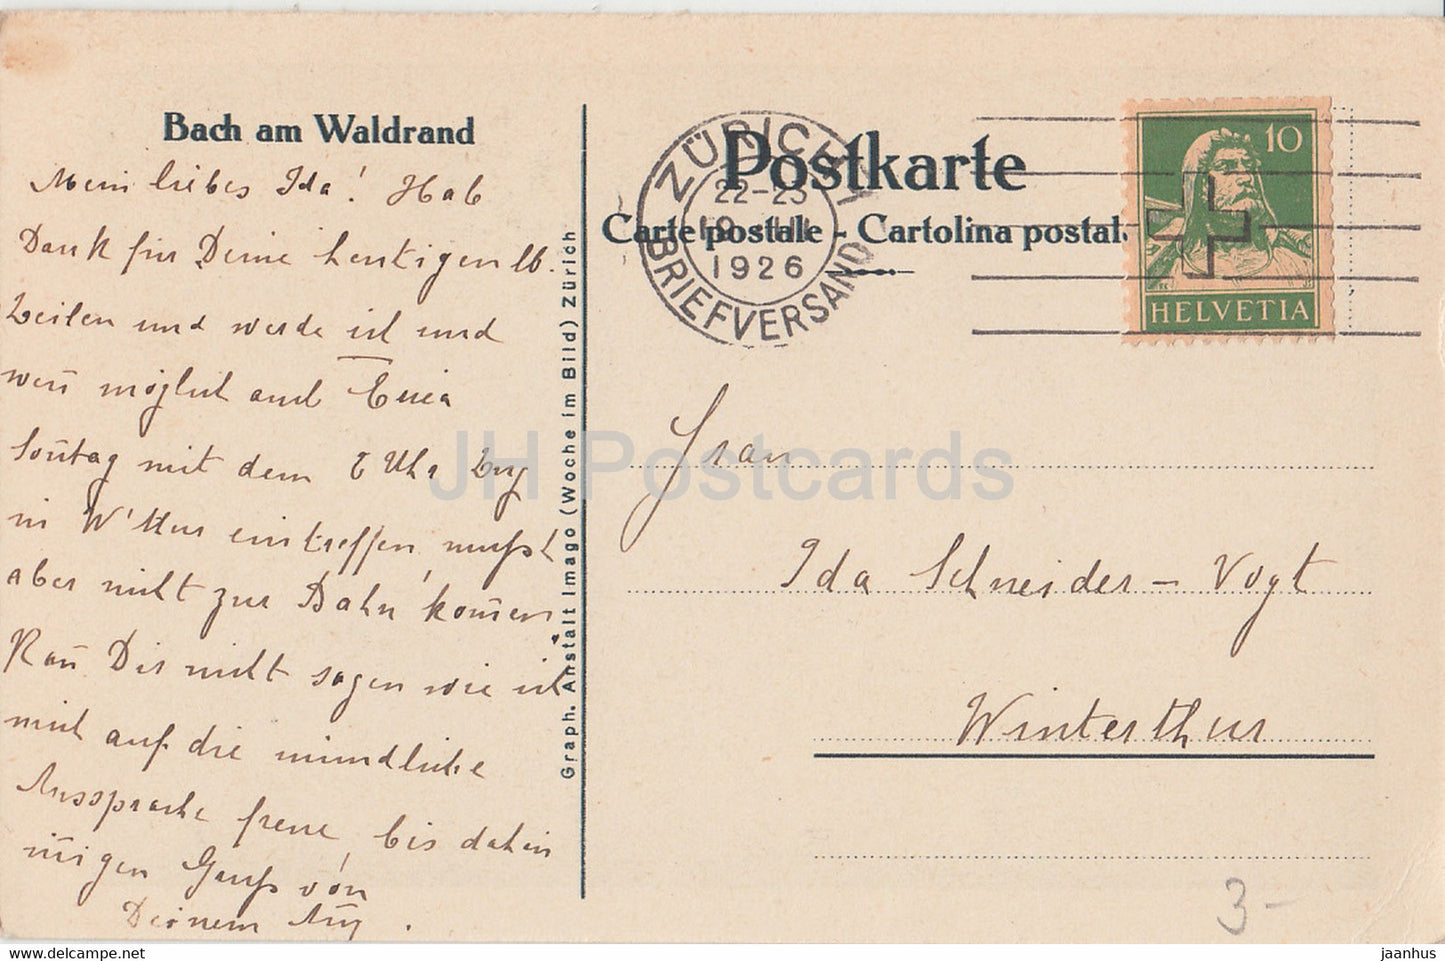 Bach am Waldrand - old postcard - Switzerland - 1926 - used